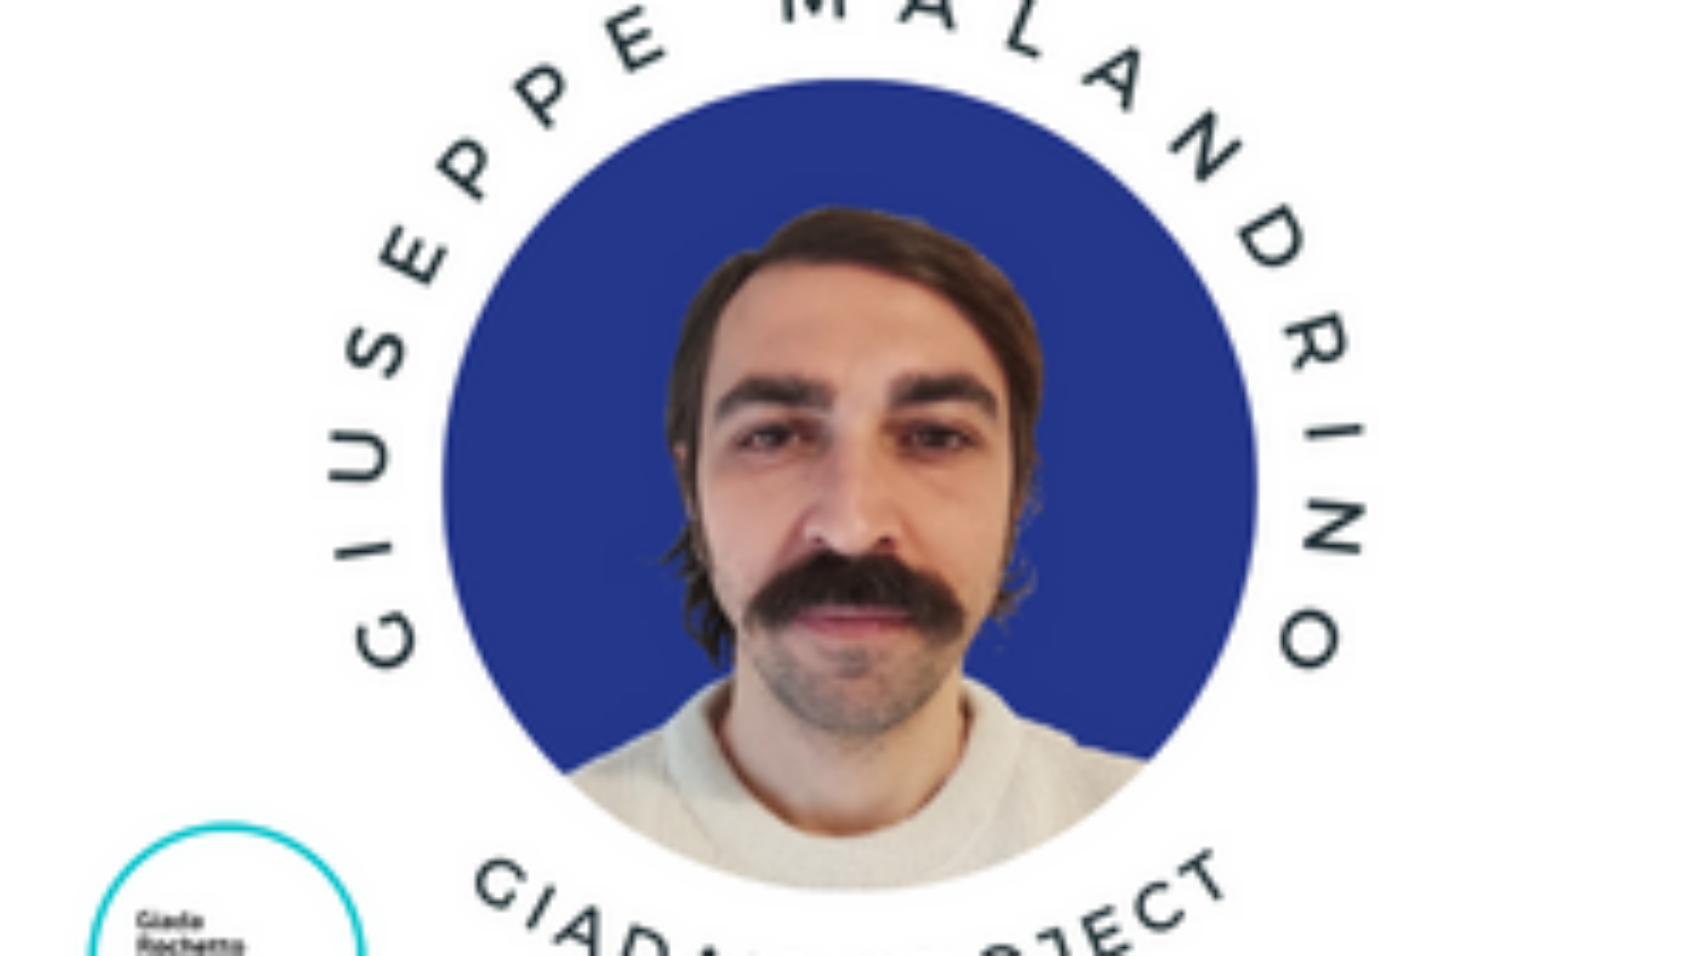 Giuseppe Malandrino per Giada's Project